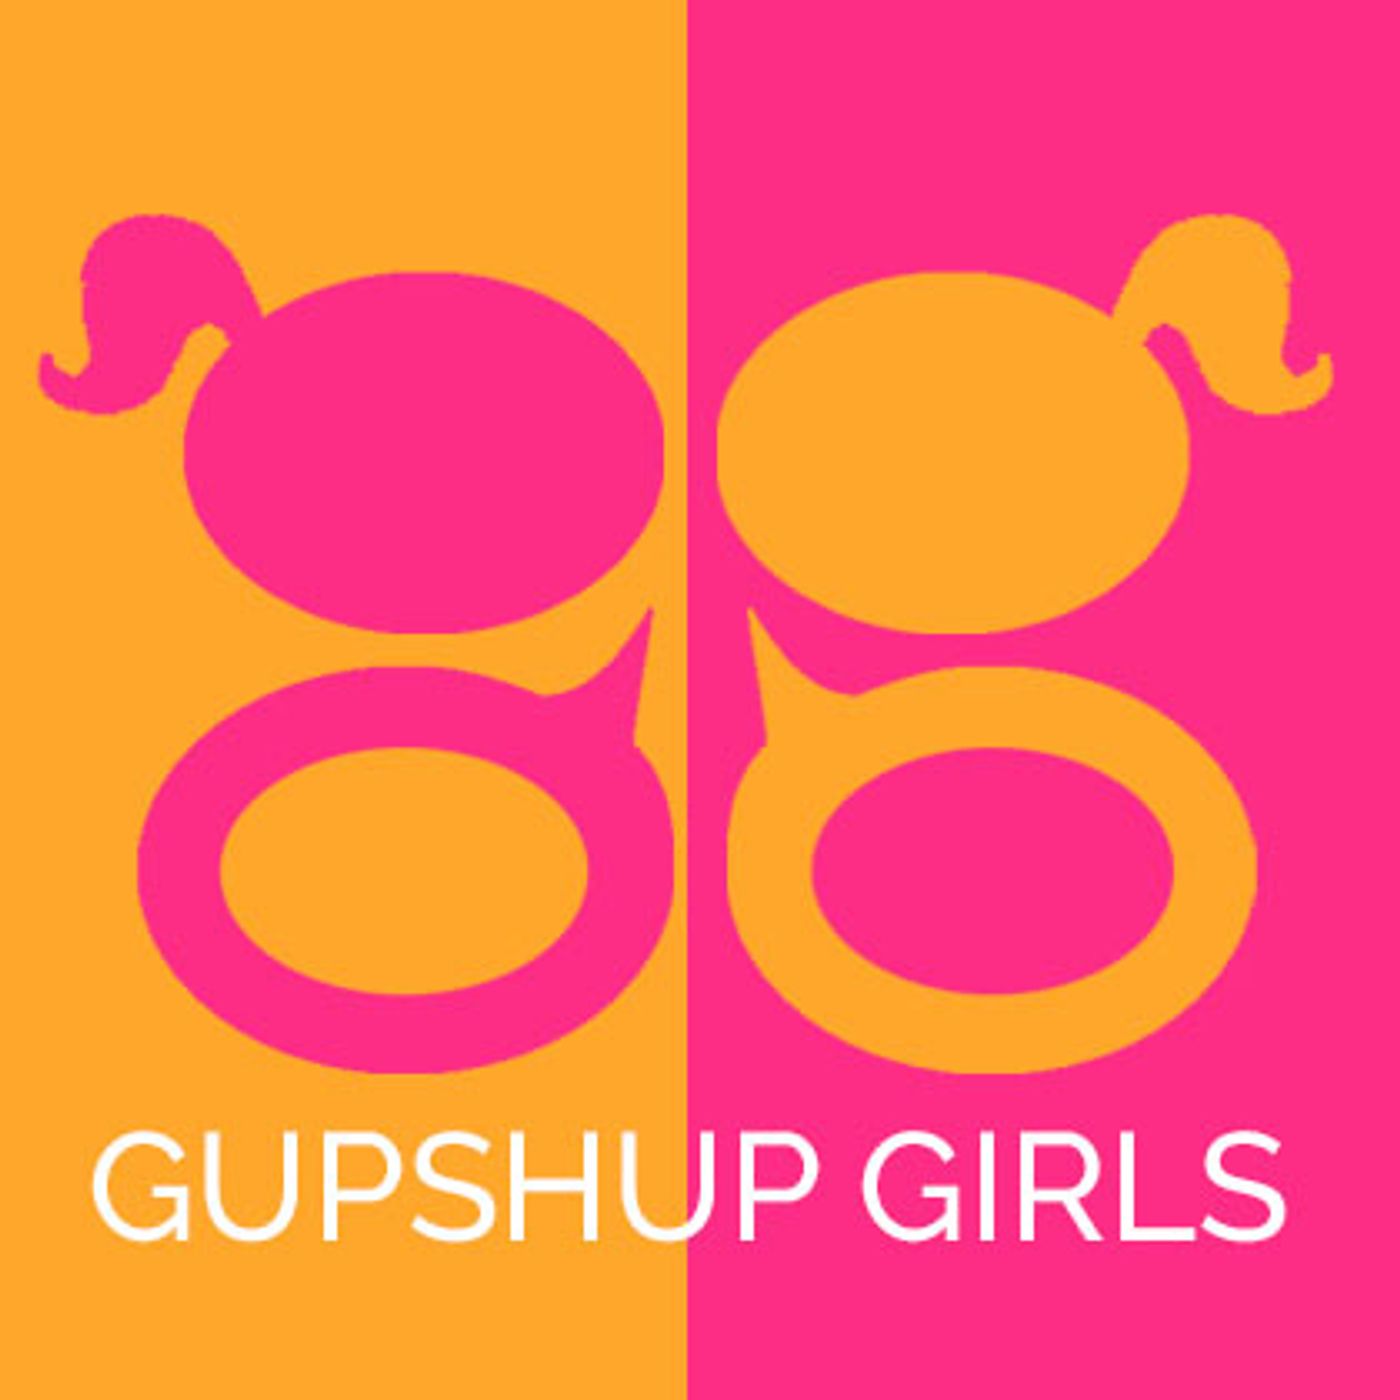 Gupshup Girls - Bollywood Gossip